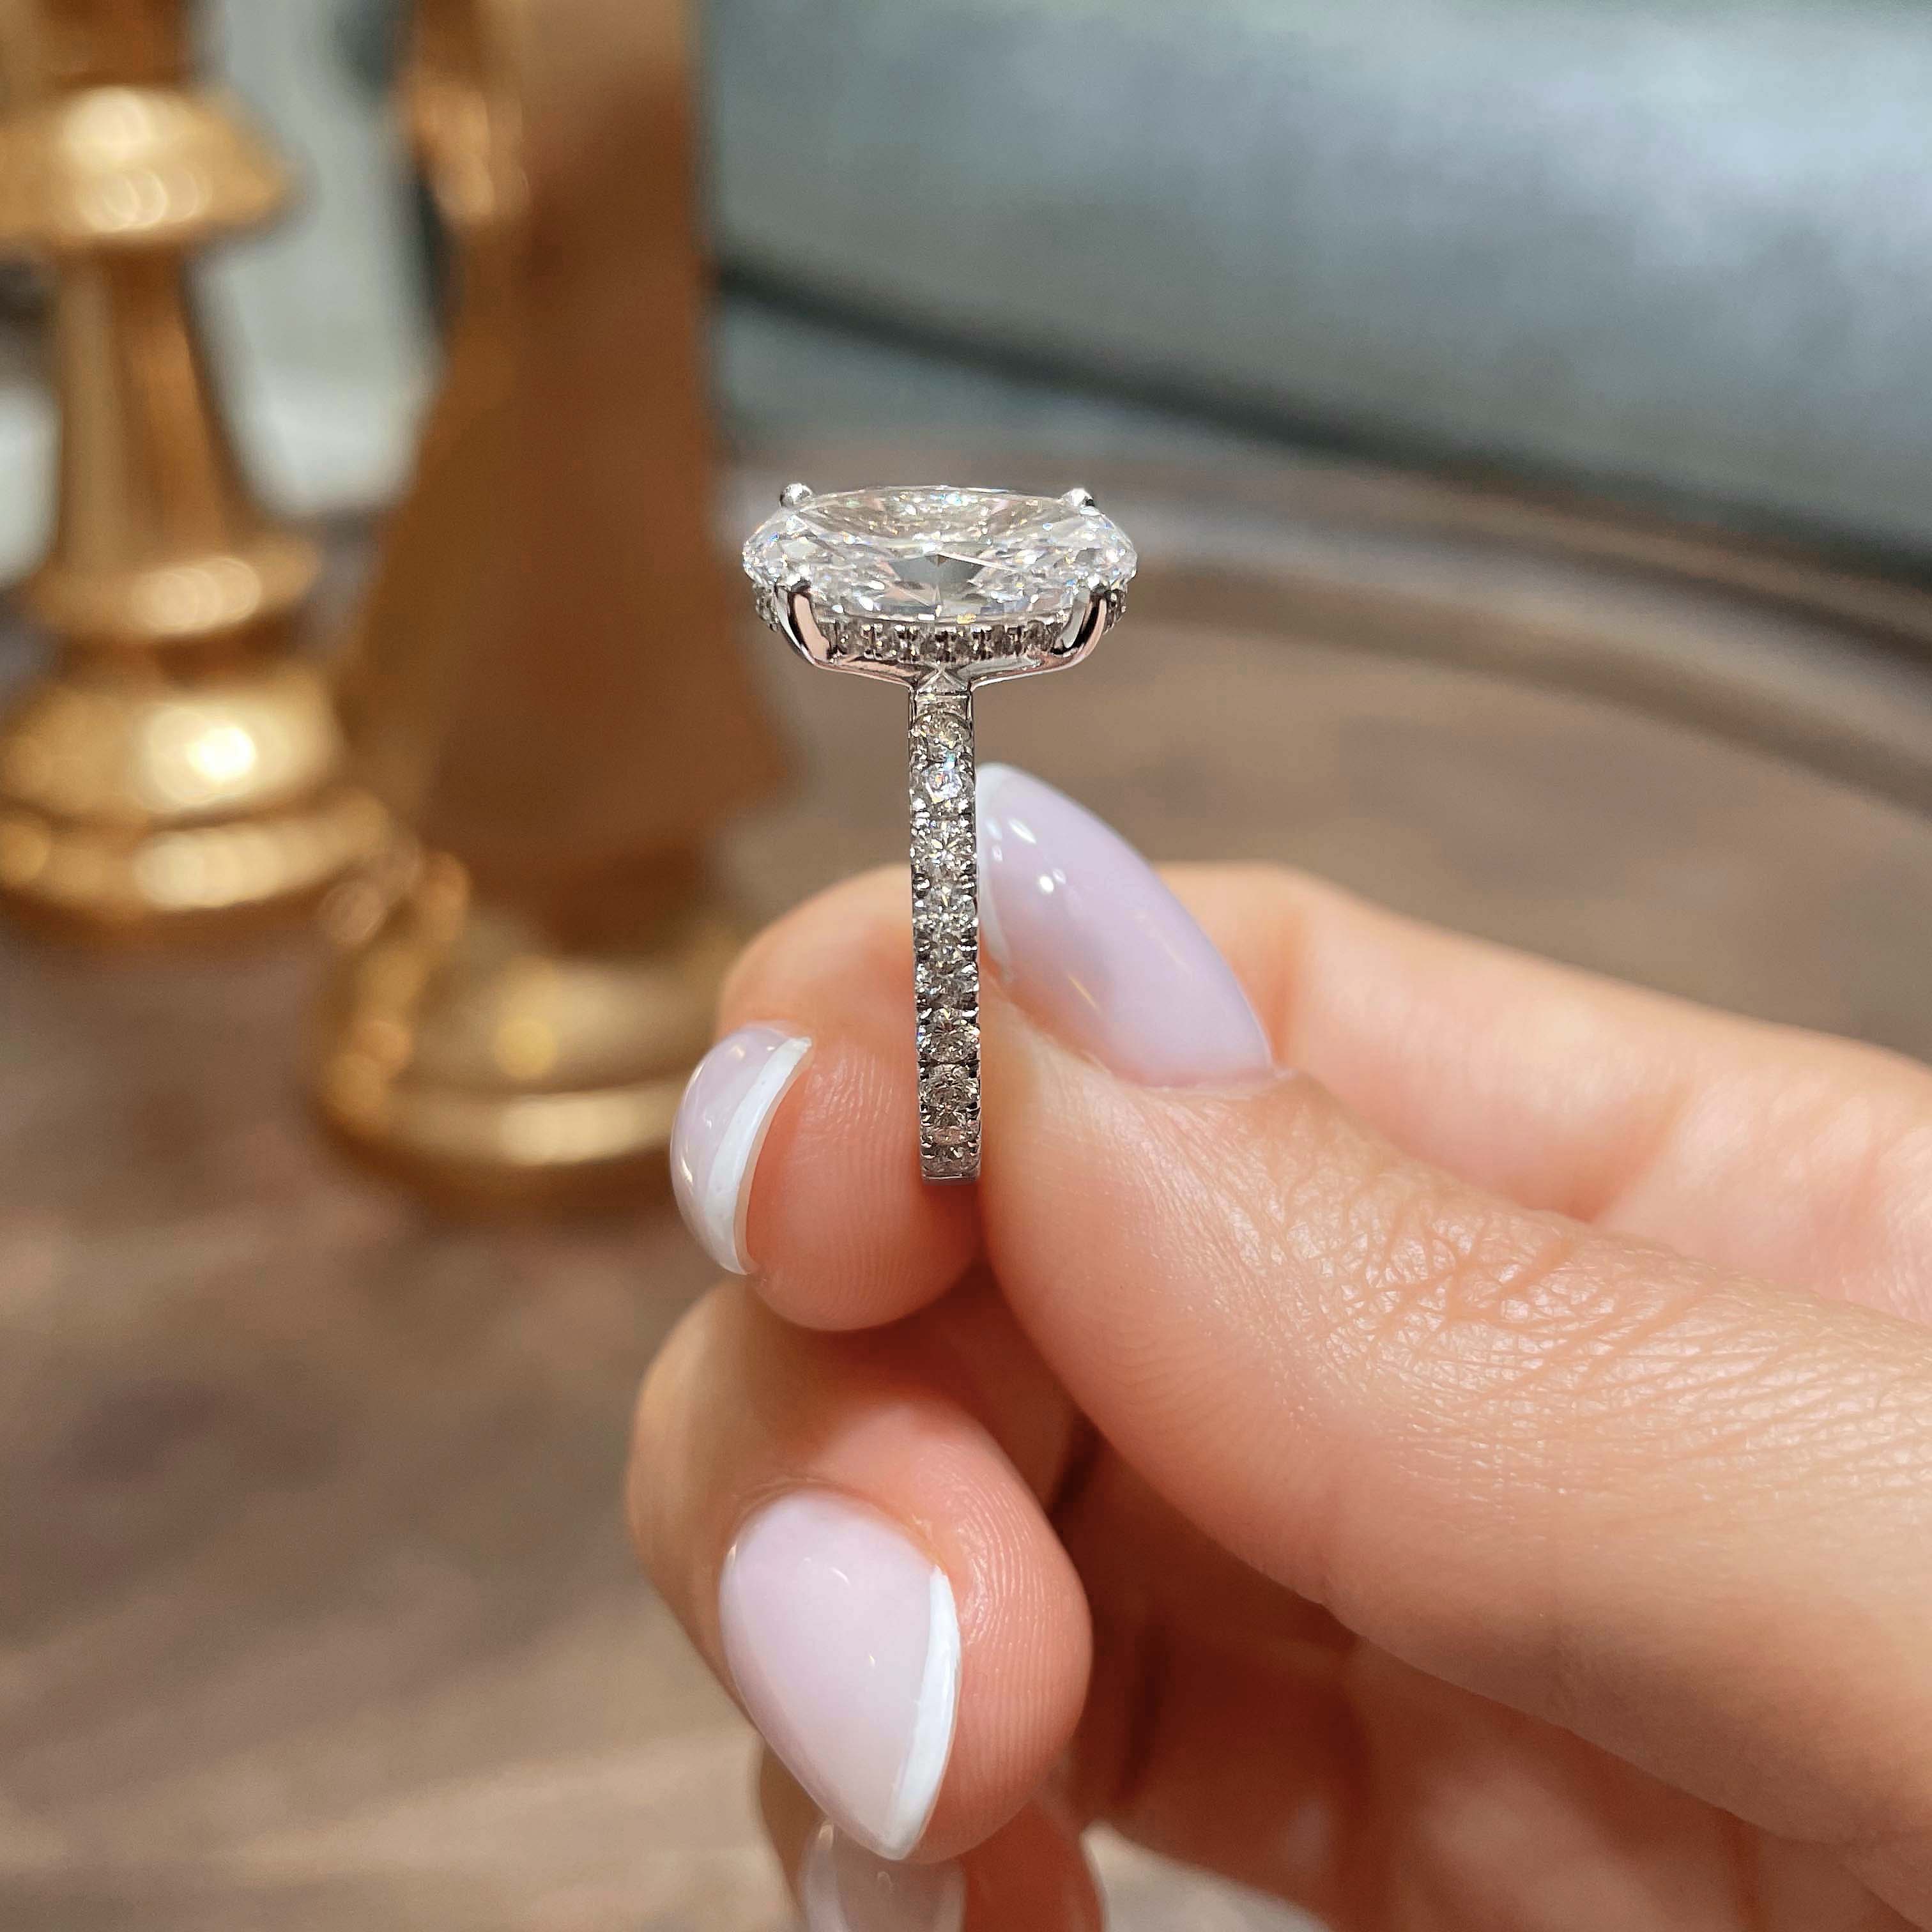 Lucy Diamond Engagement Ring   (3.5 Carat) -14K White Gold